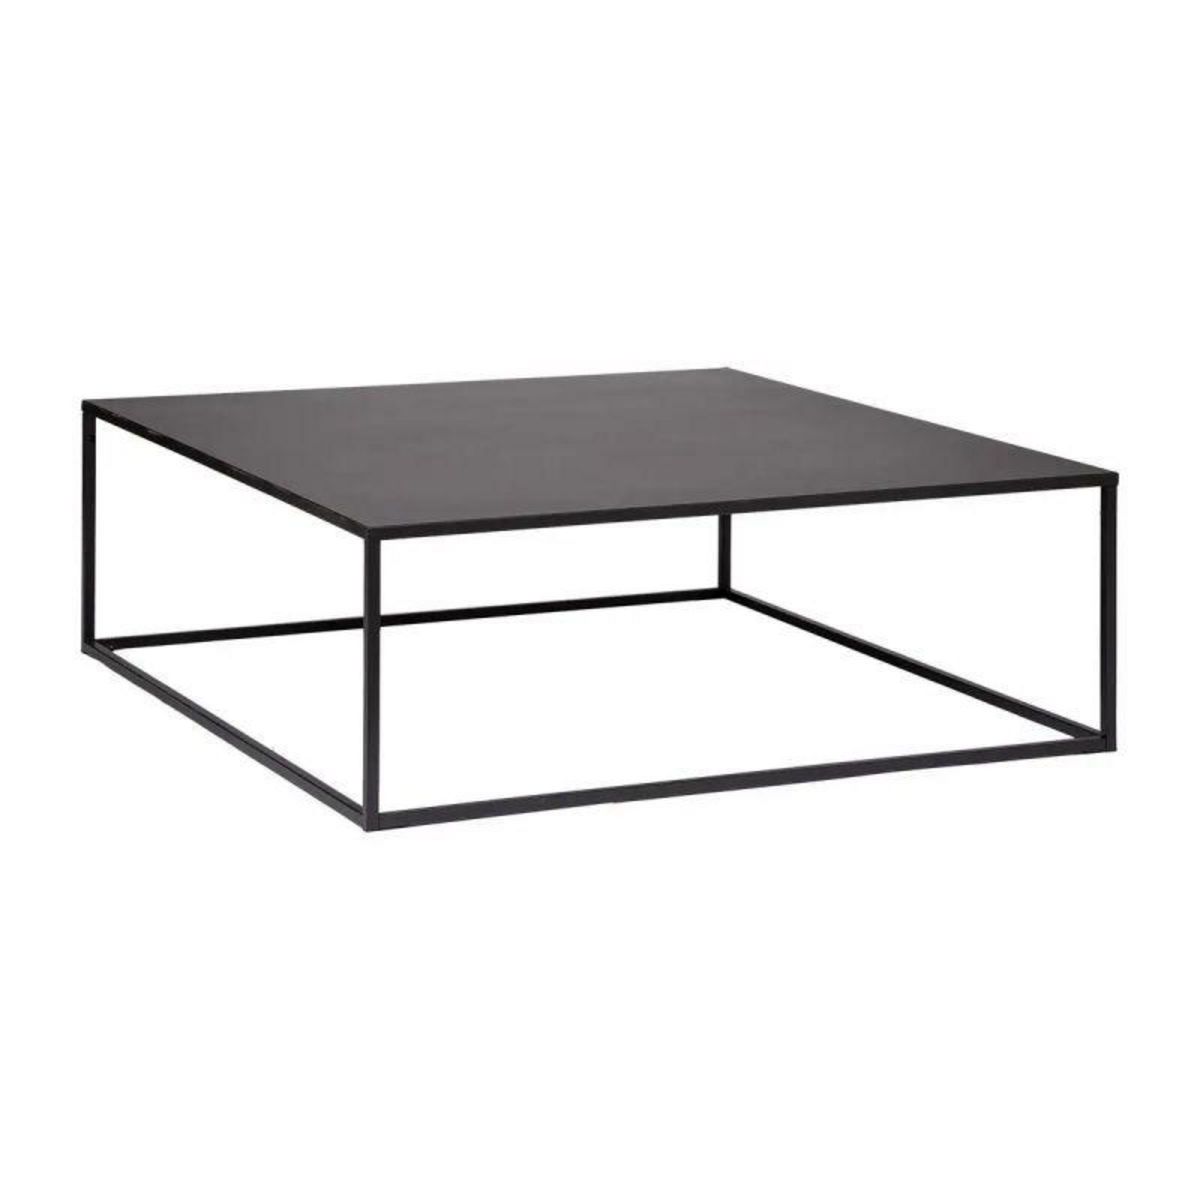  Table Basse Design  Gota  100cm Noir